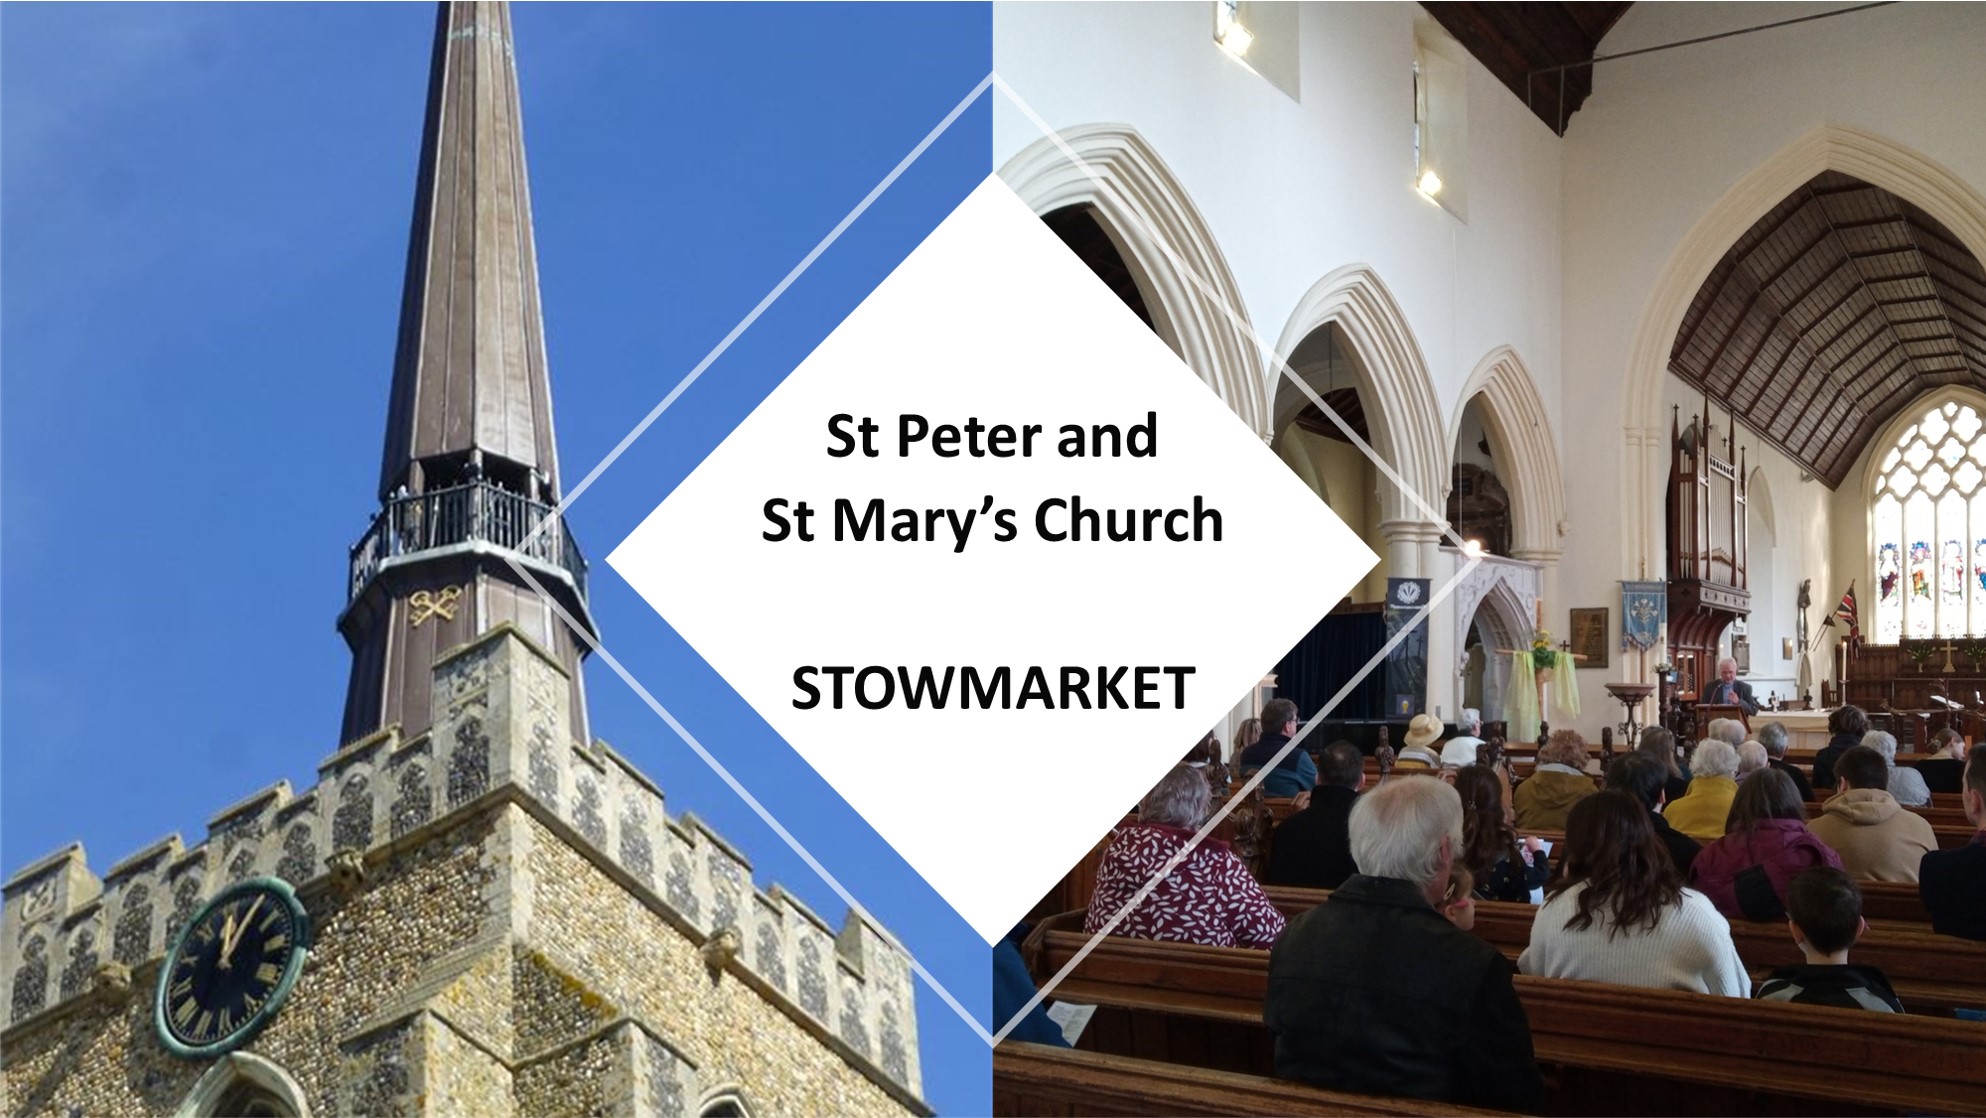 Stowmarket Parish church